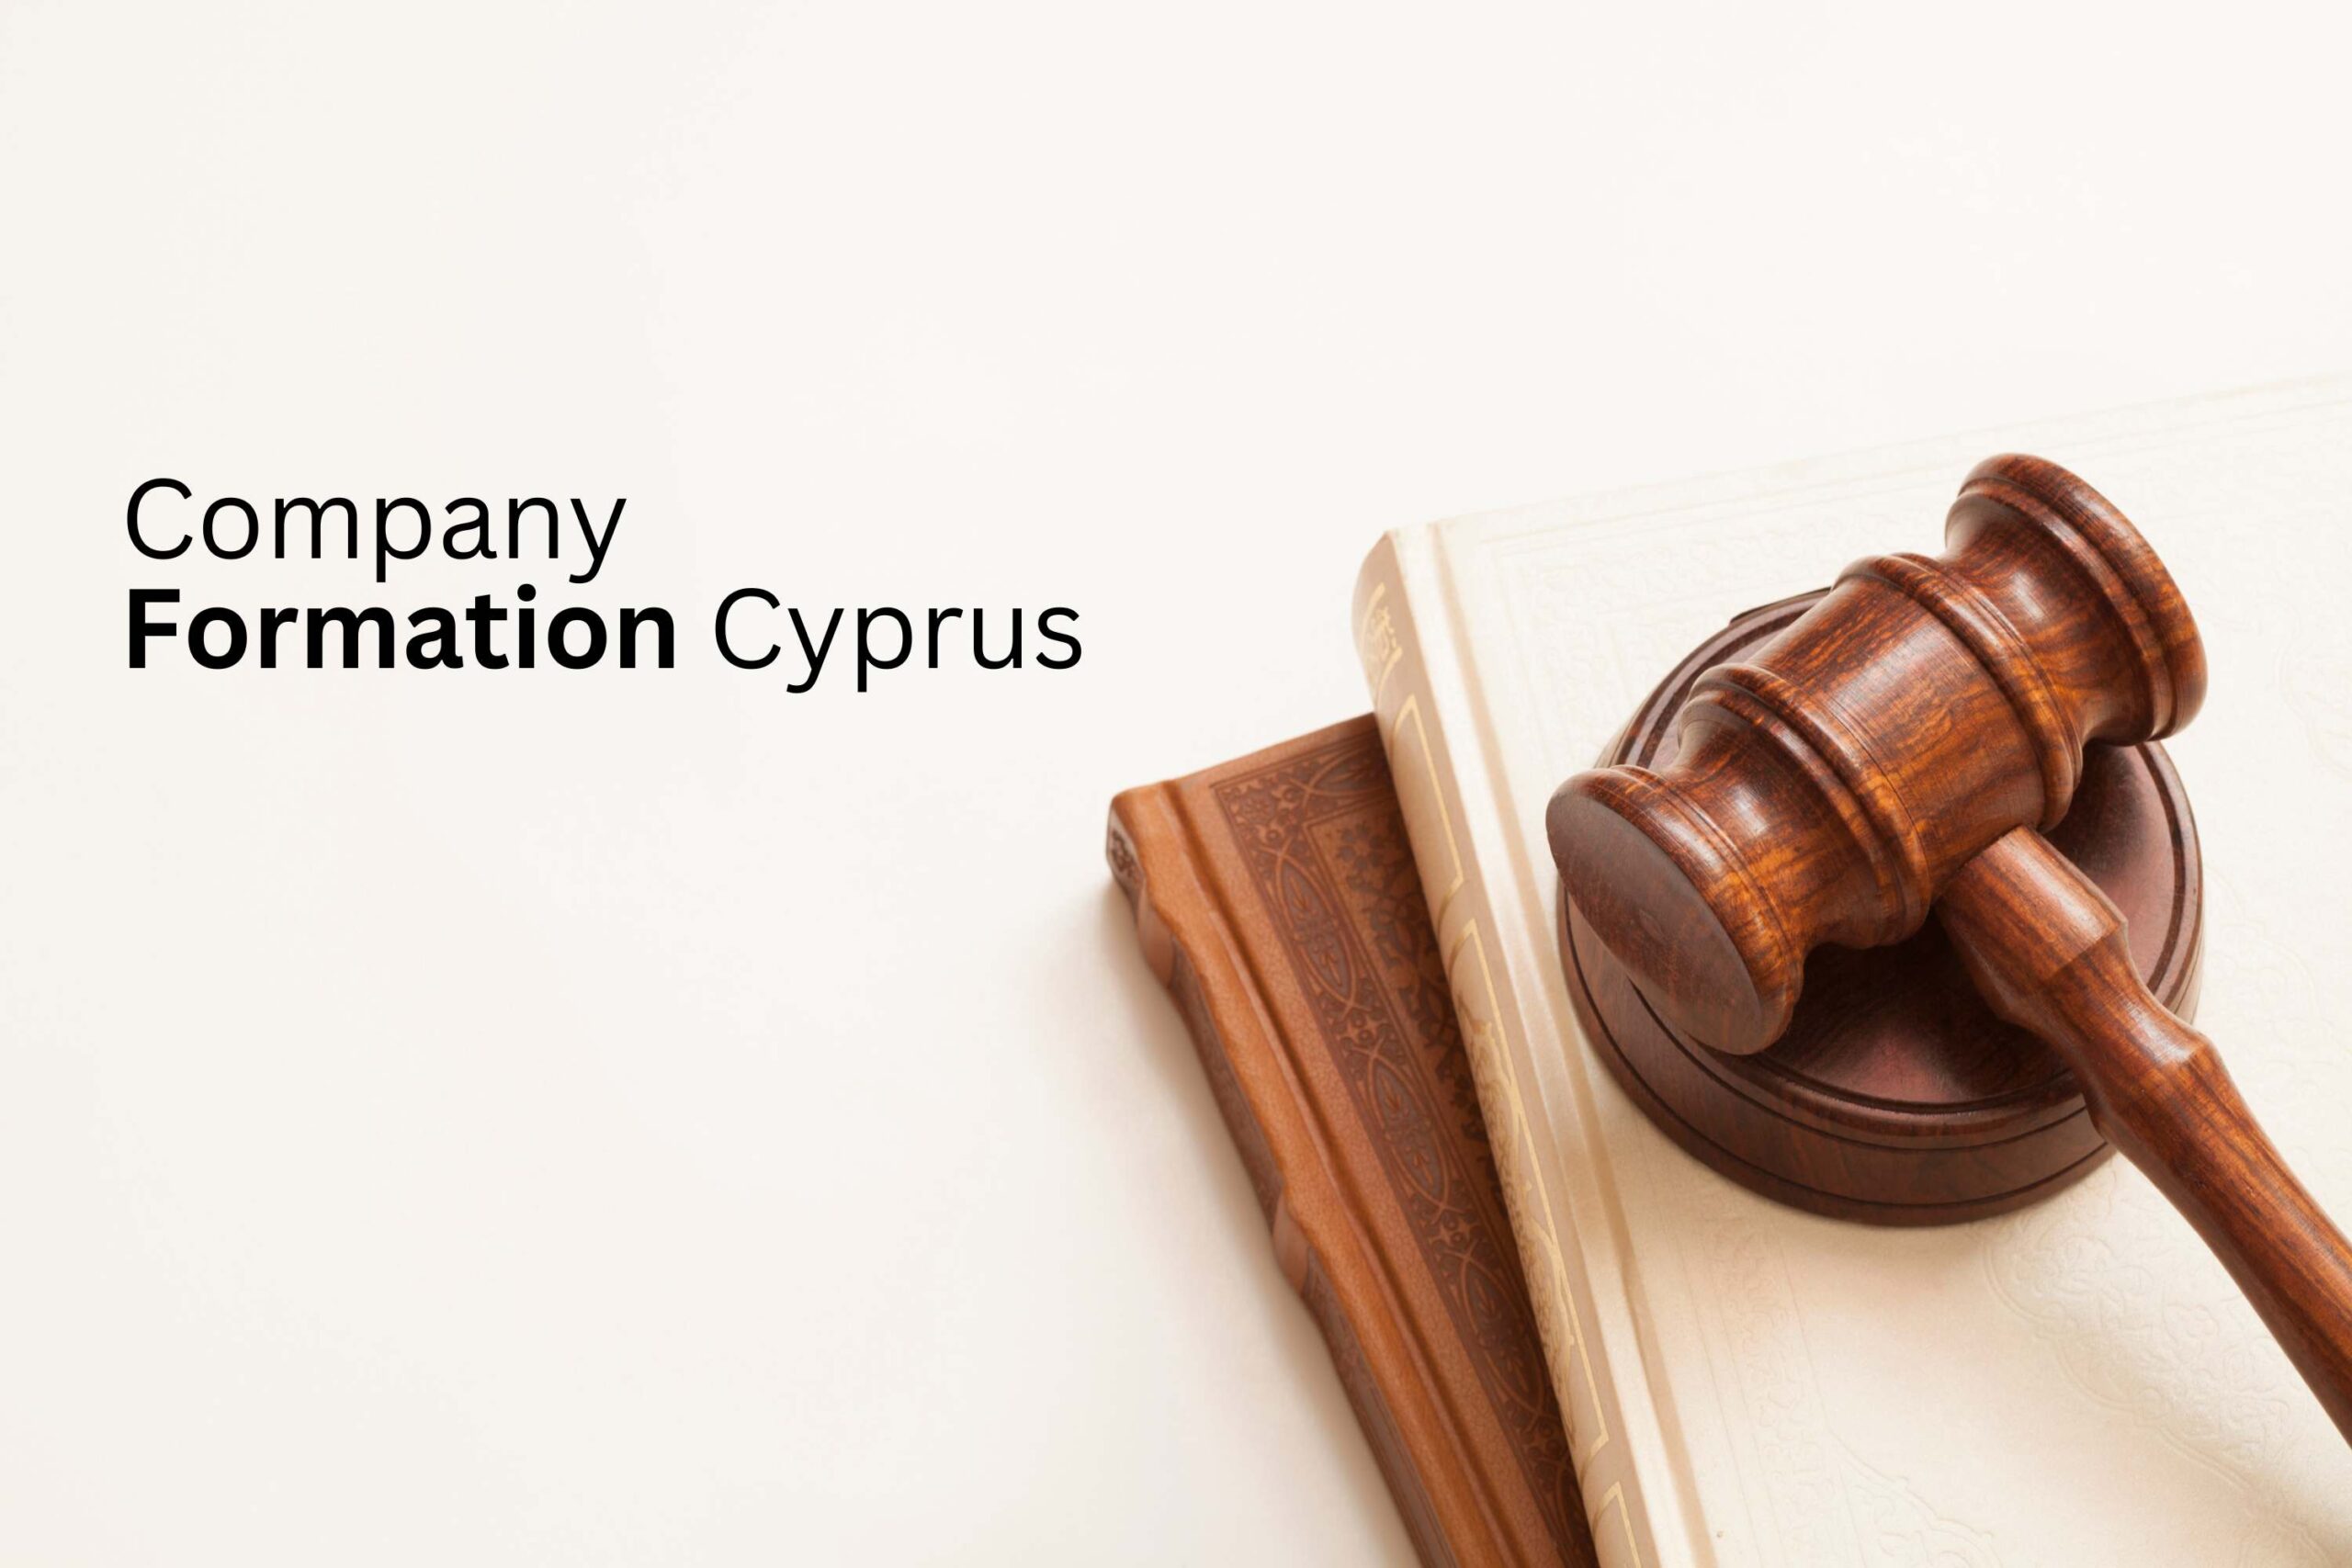 Company Formation Cyprus